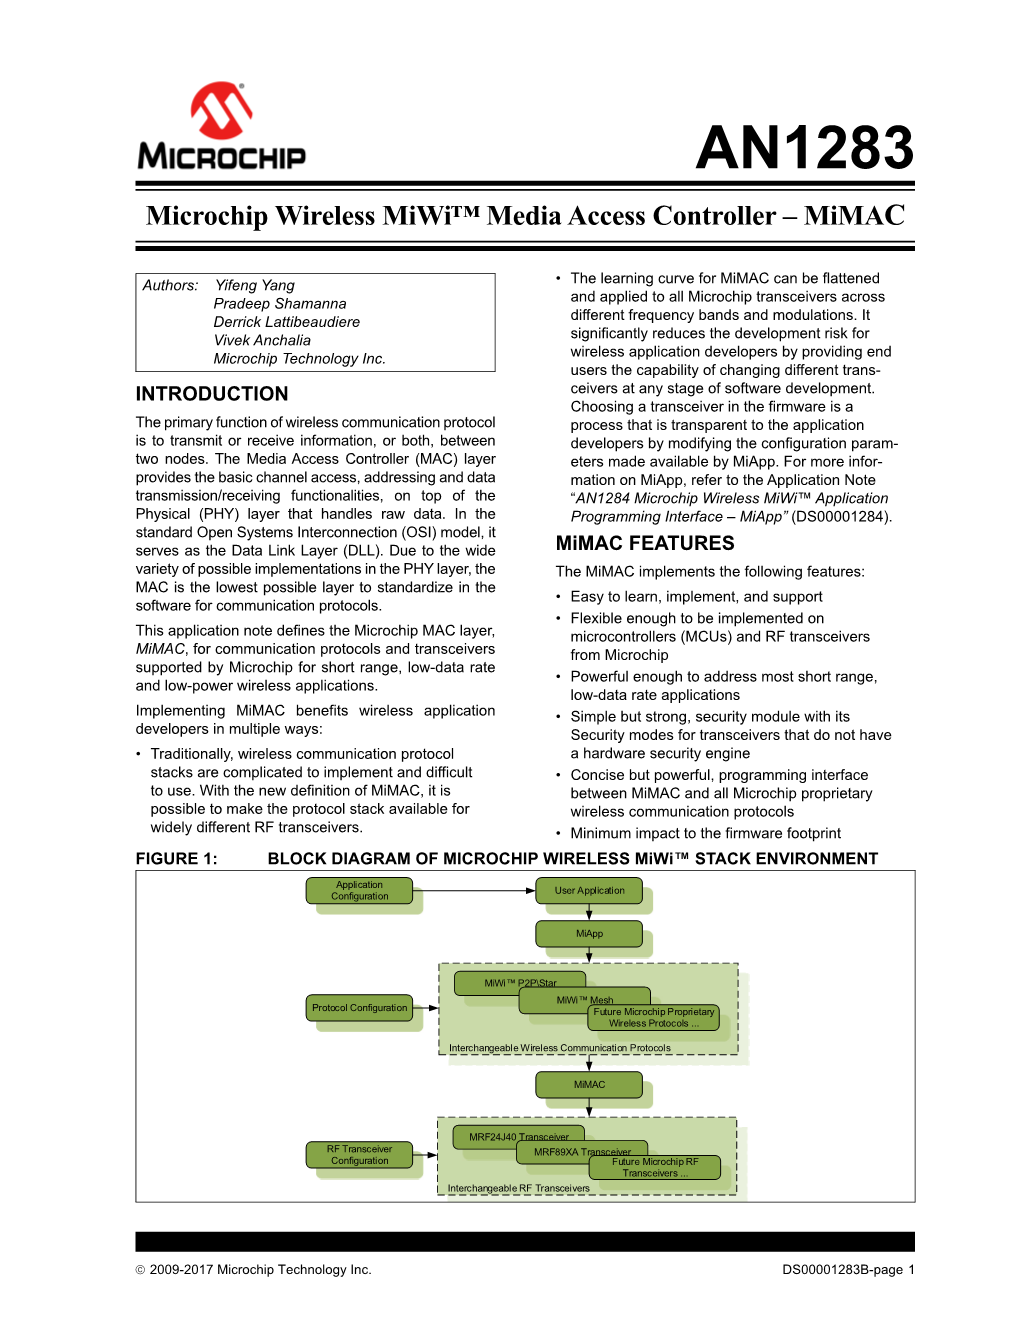 Microchip Wireless Miwi Media Access